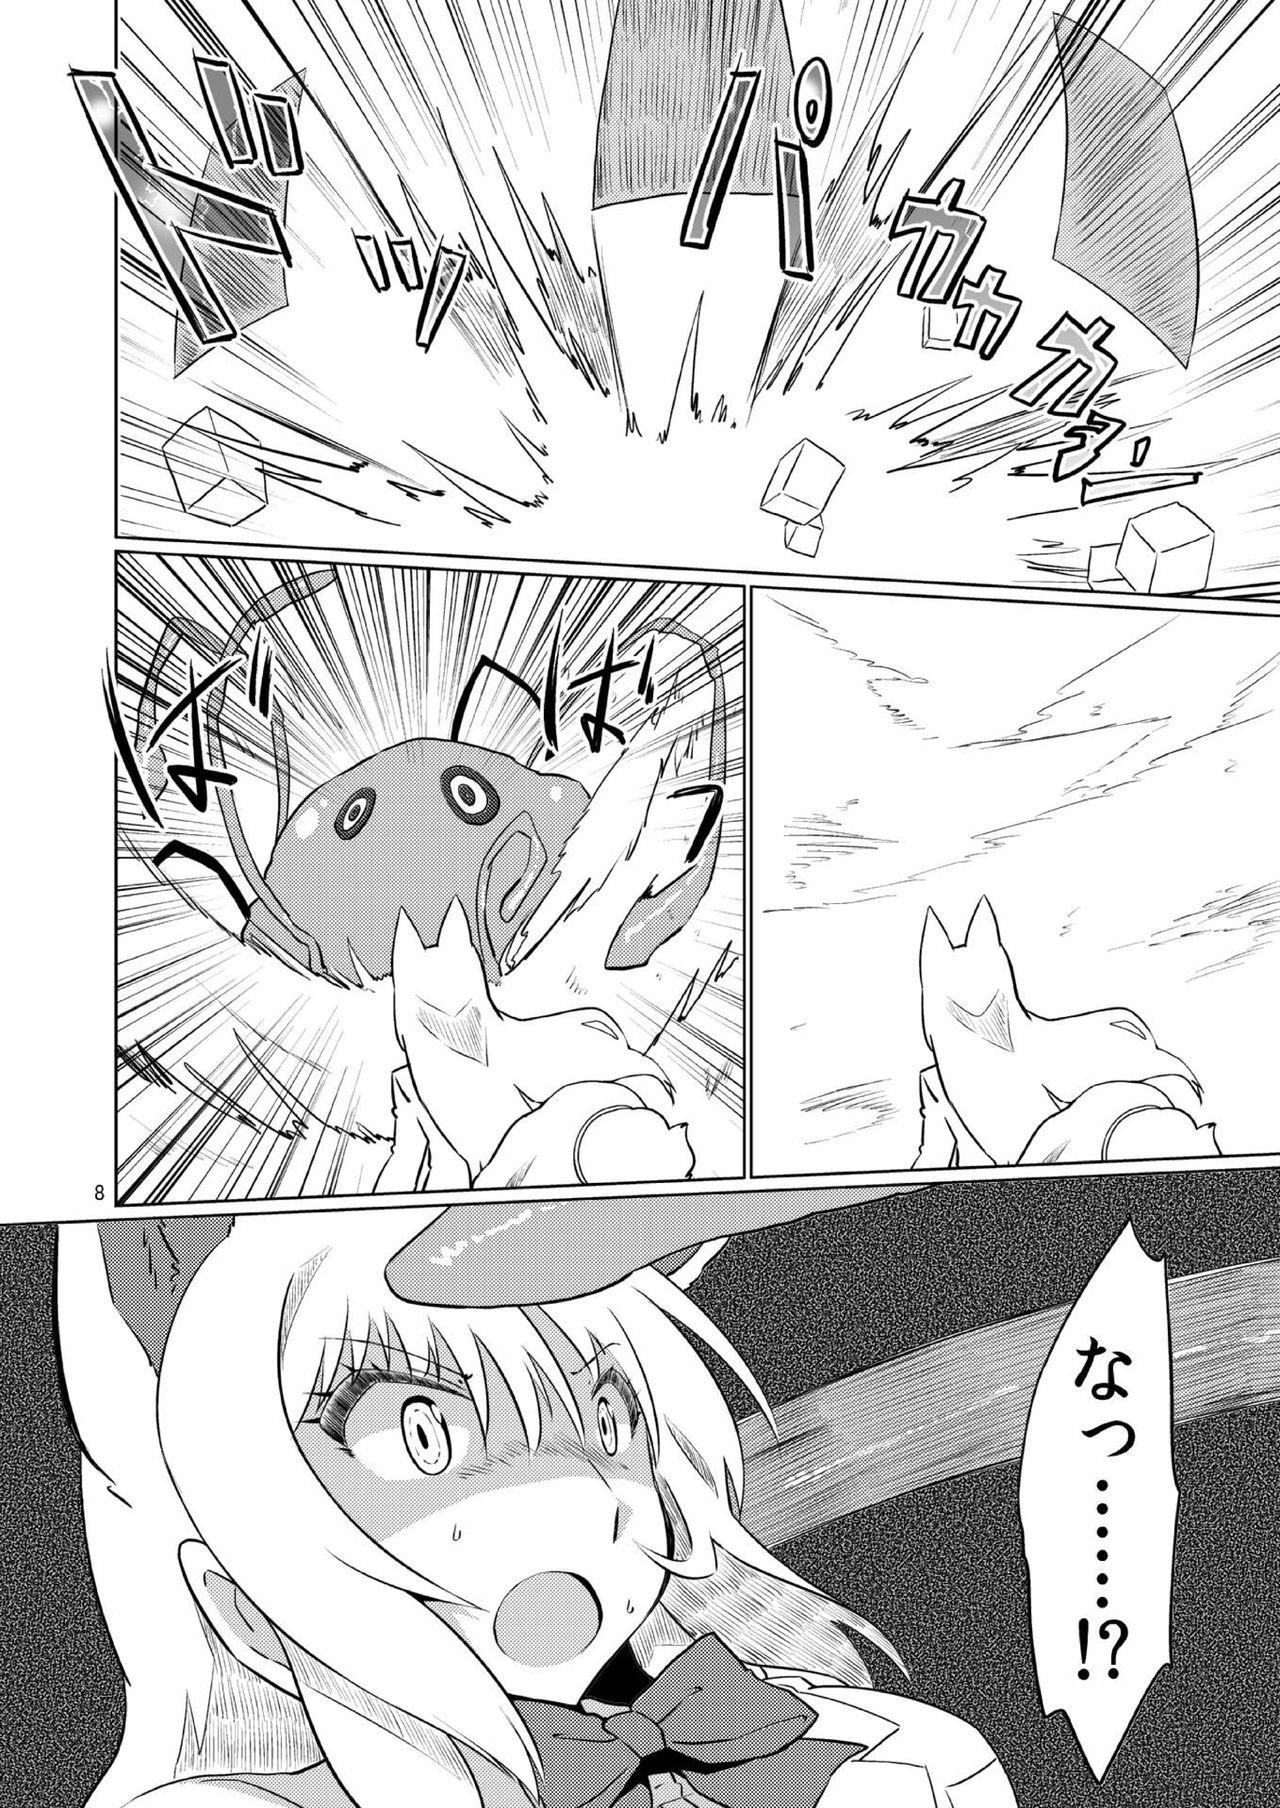 Cream Oinarisama vs Shokushu - Kemono friends Huge - Page 8